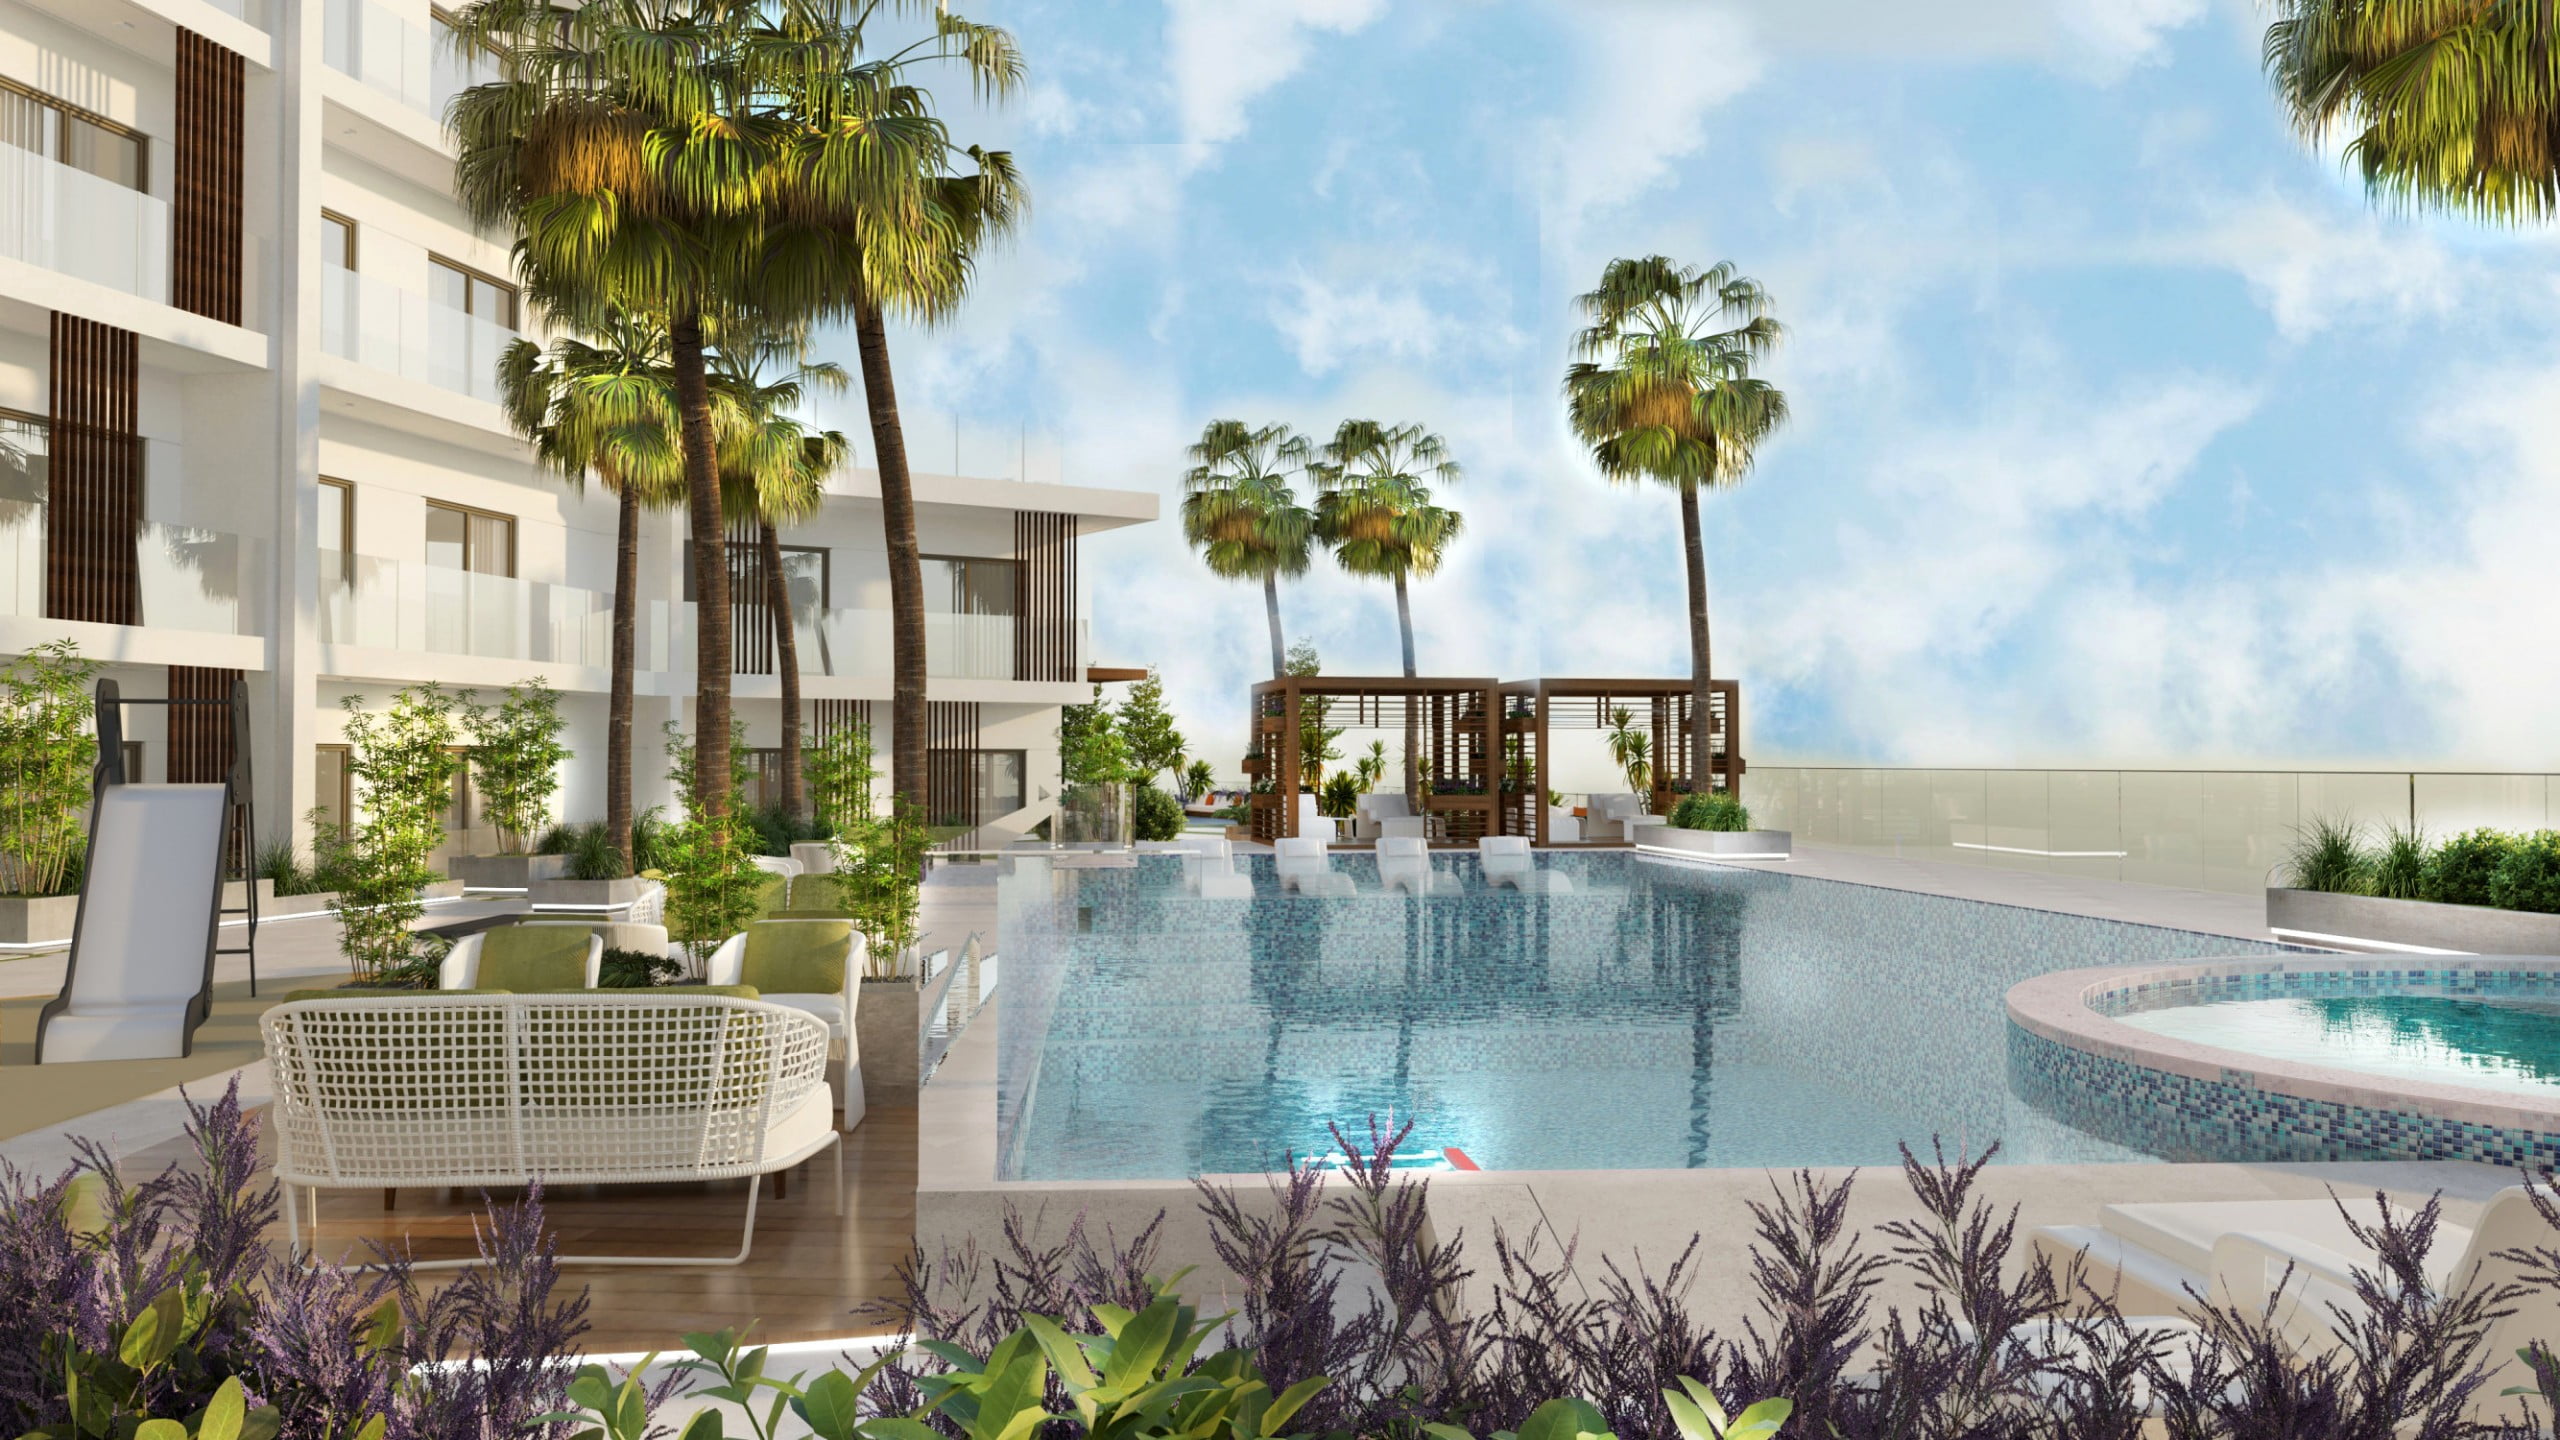 prime gardens piscine scaled - Immobilier Dubai